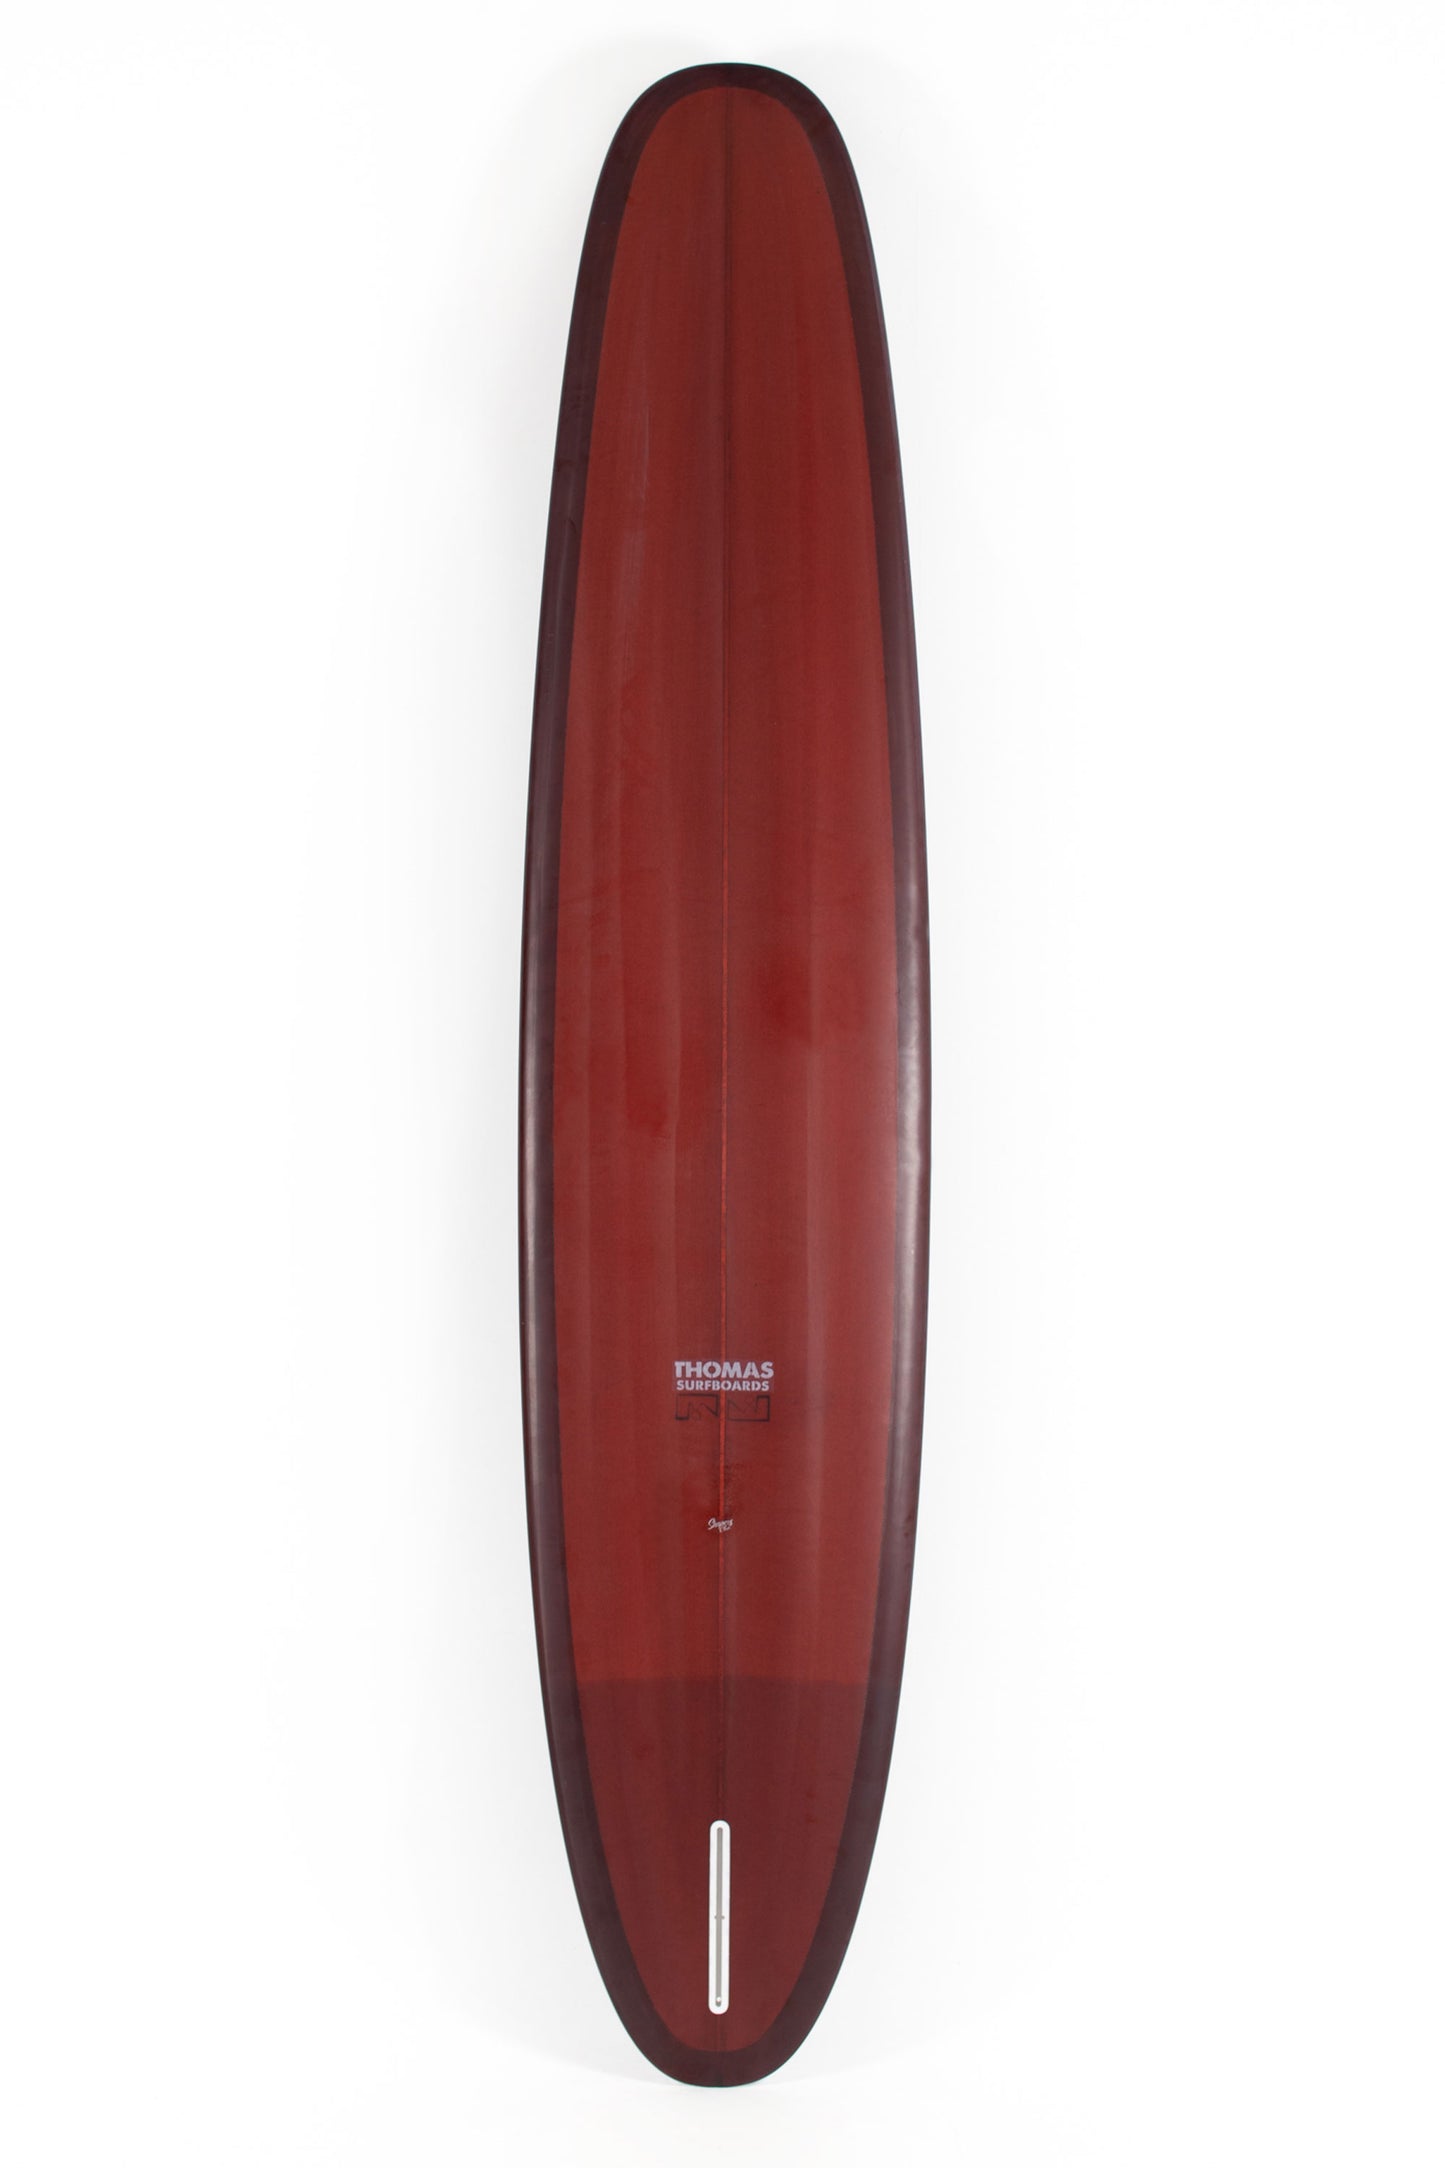 Pukas Surf Shop - Thomas Surfboards - THE HARIOT - 9'8" x 23 1/16 x 3 1/16 - THEHARRIOT98